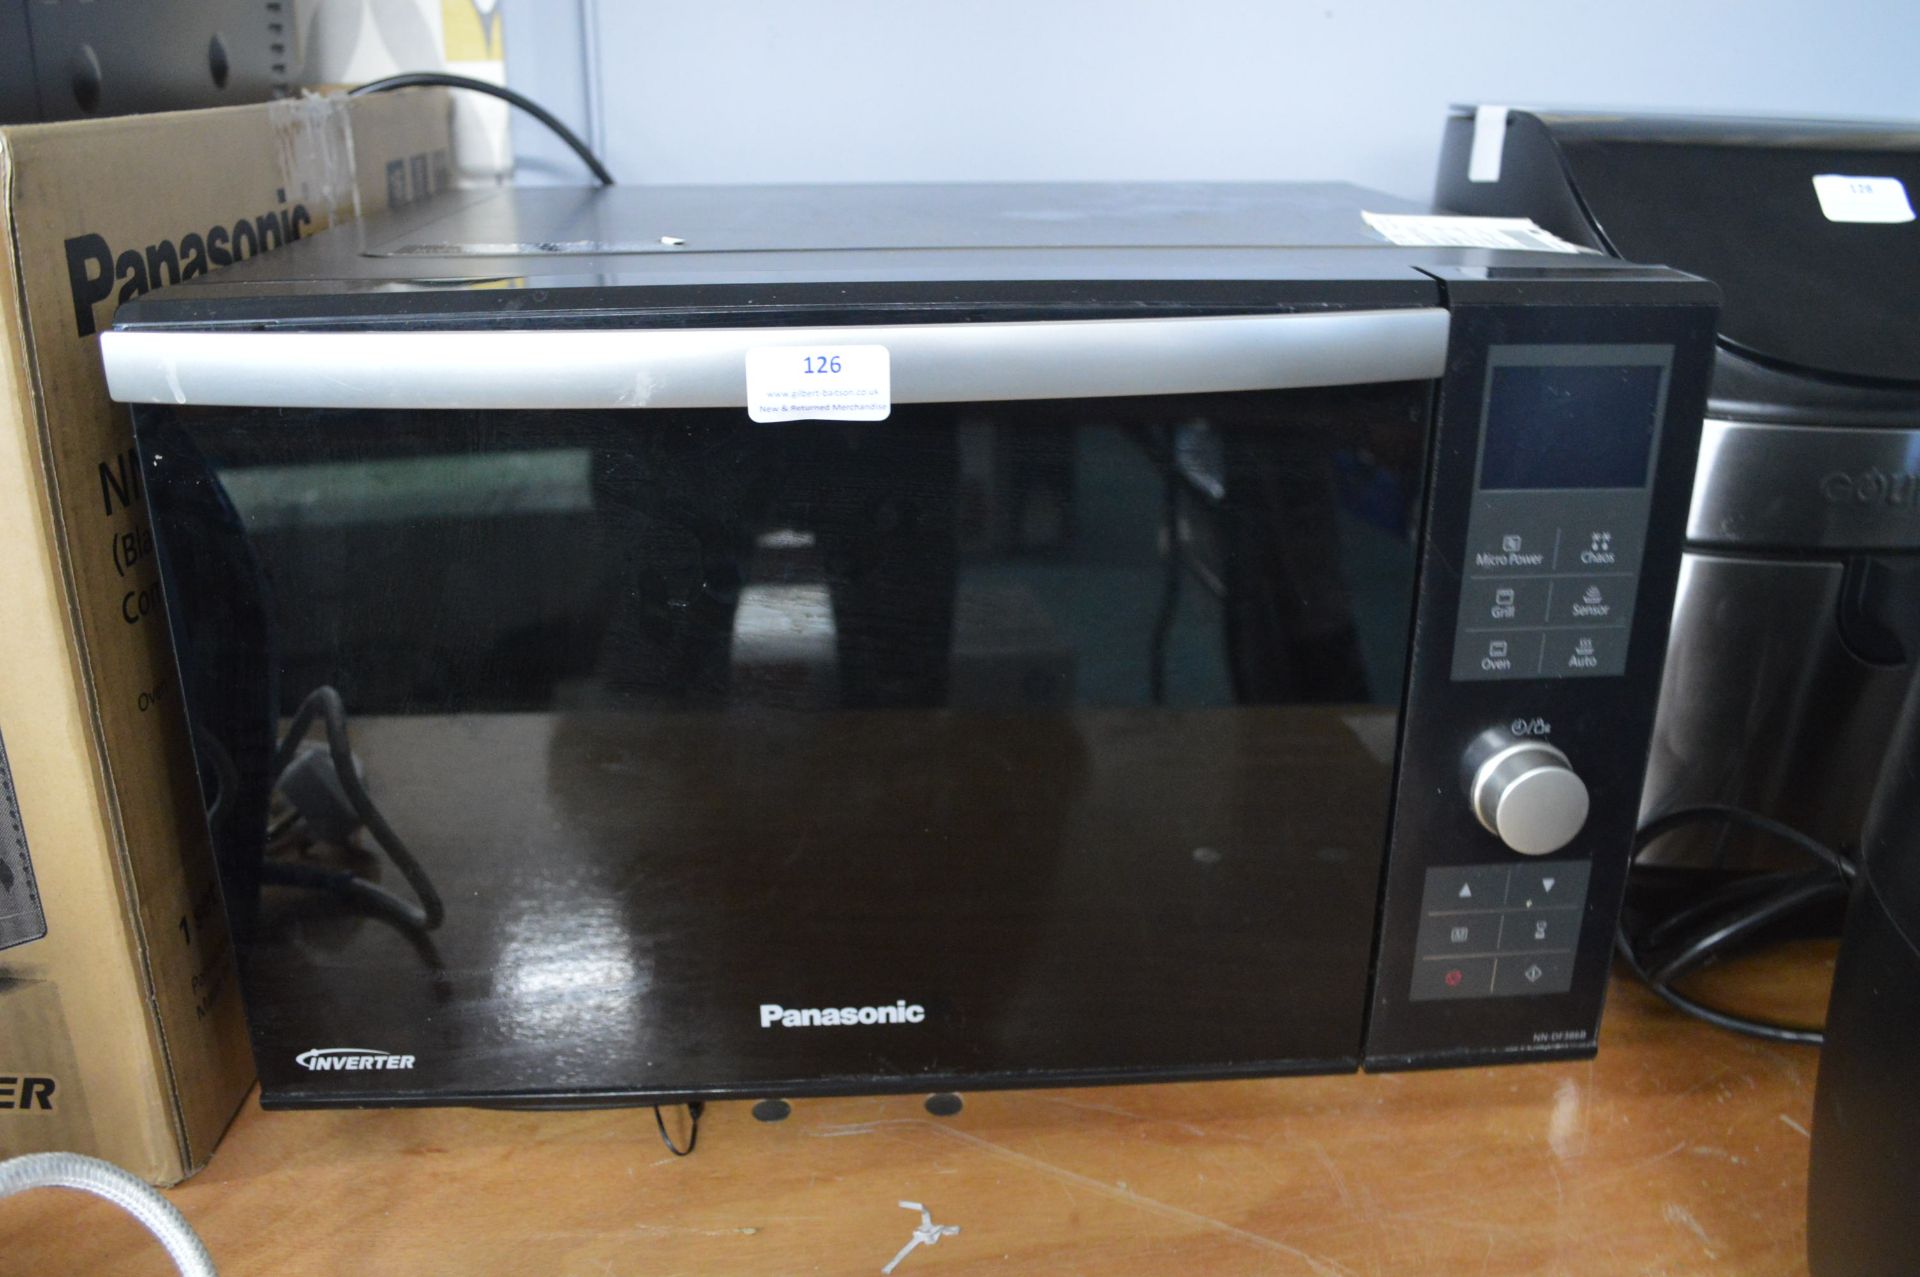 *Panasonic Invertor Combination Oven